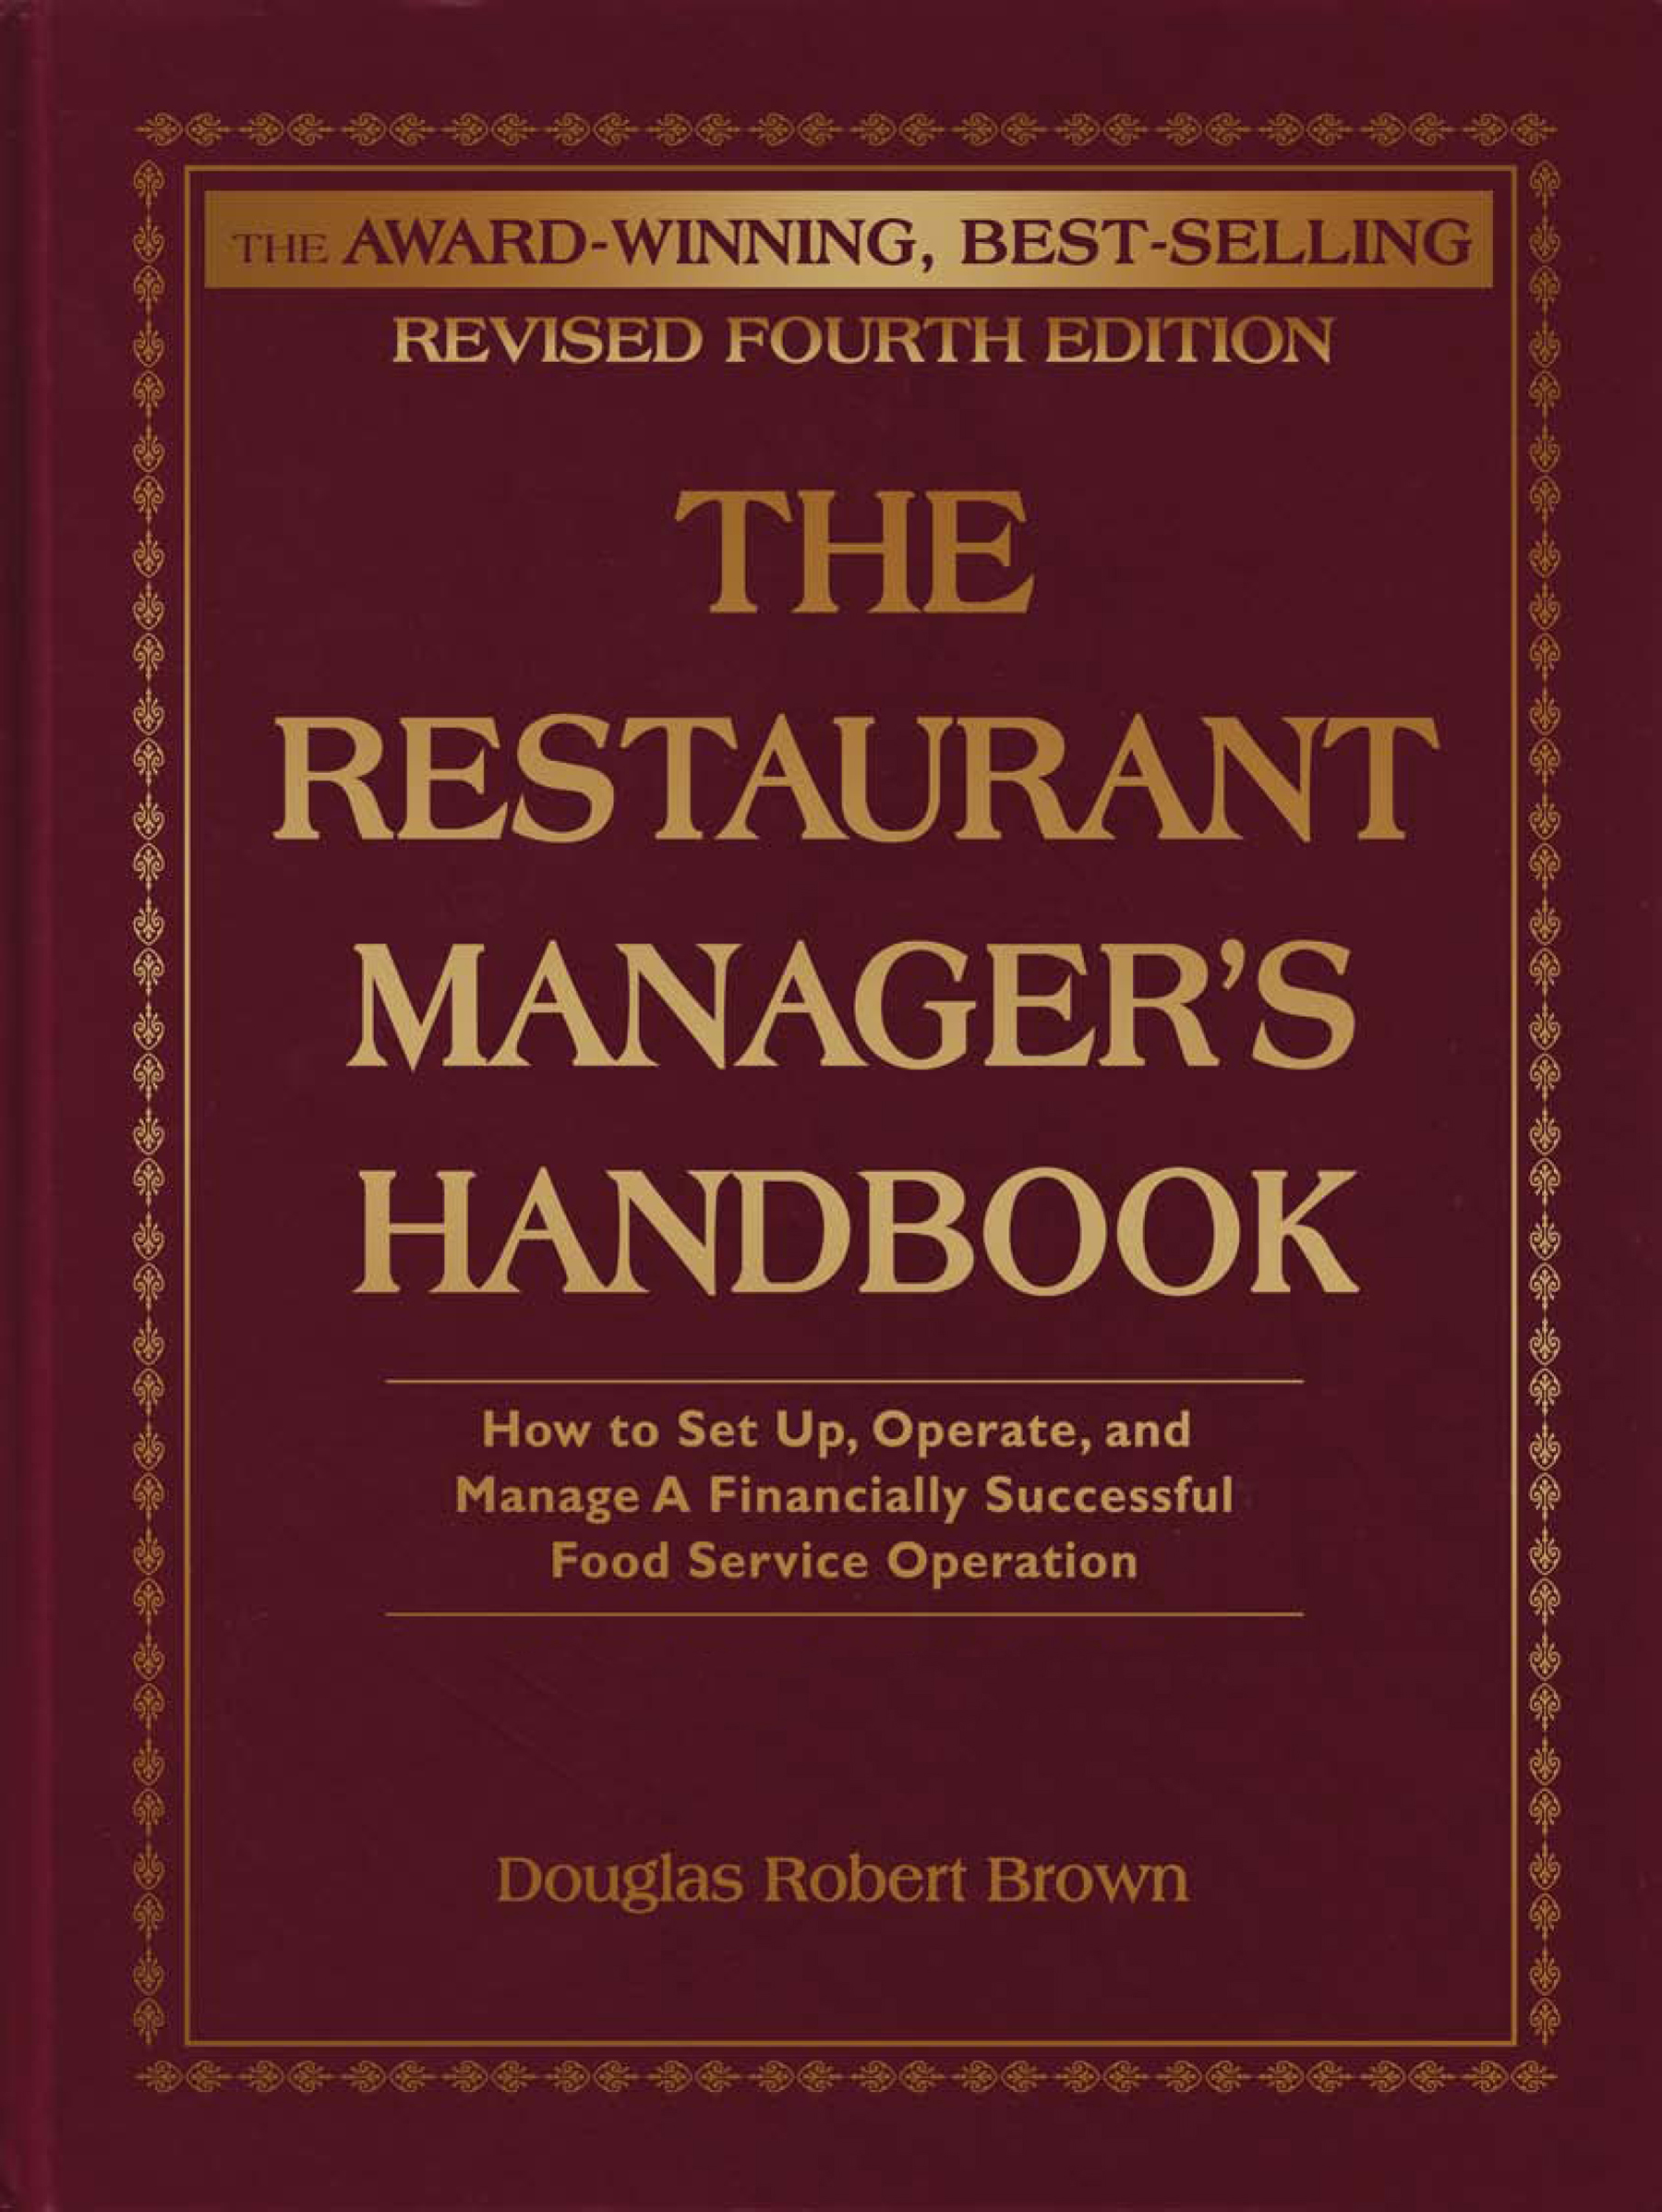 The Restaurant Manager's Handbook